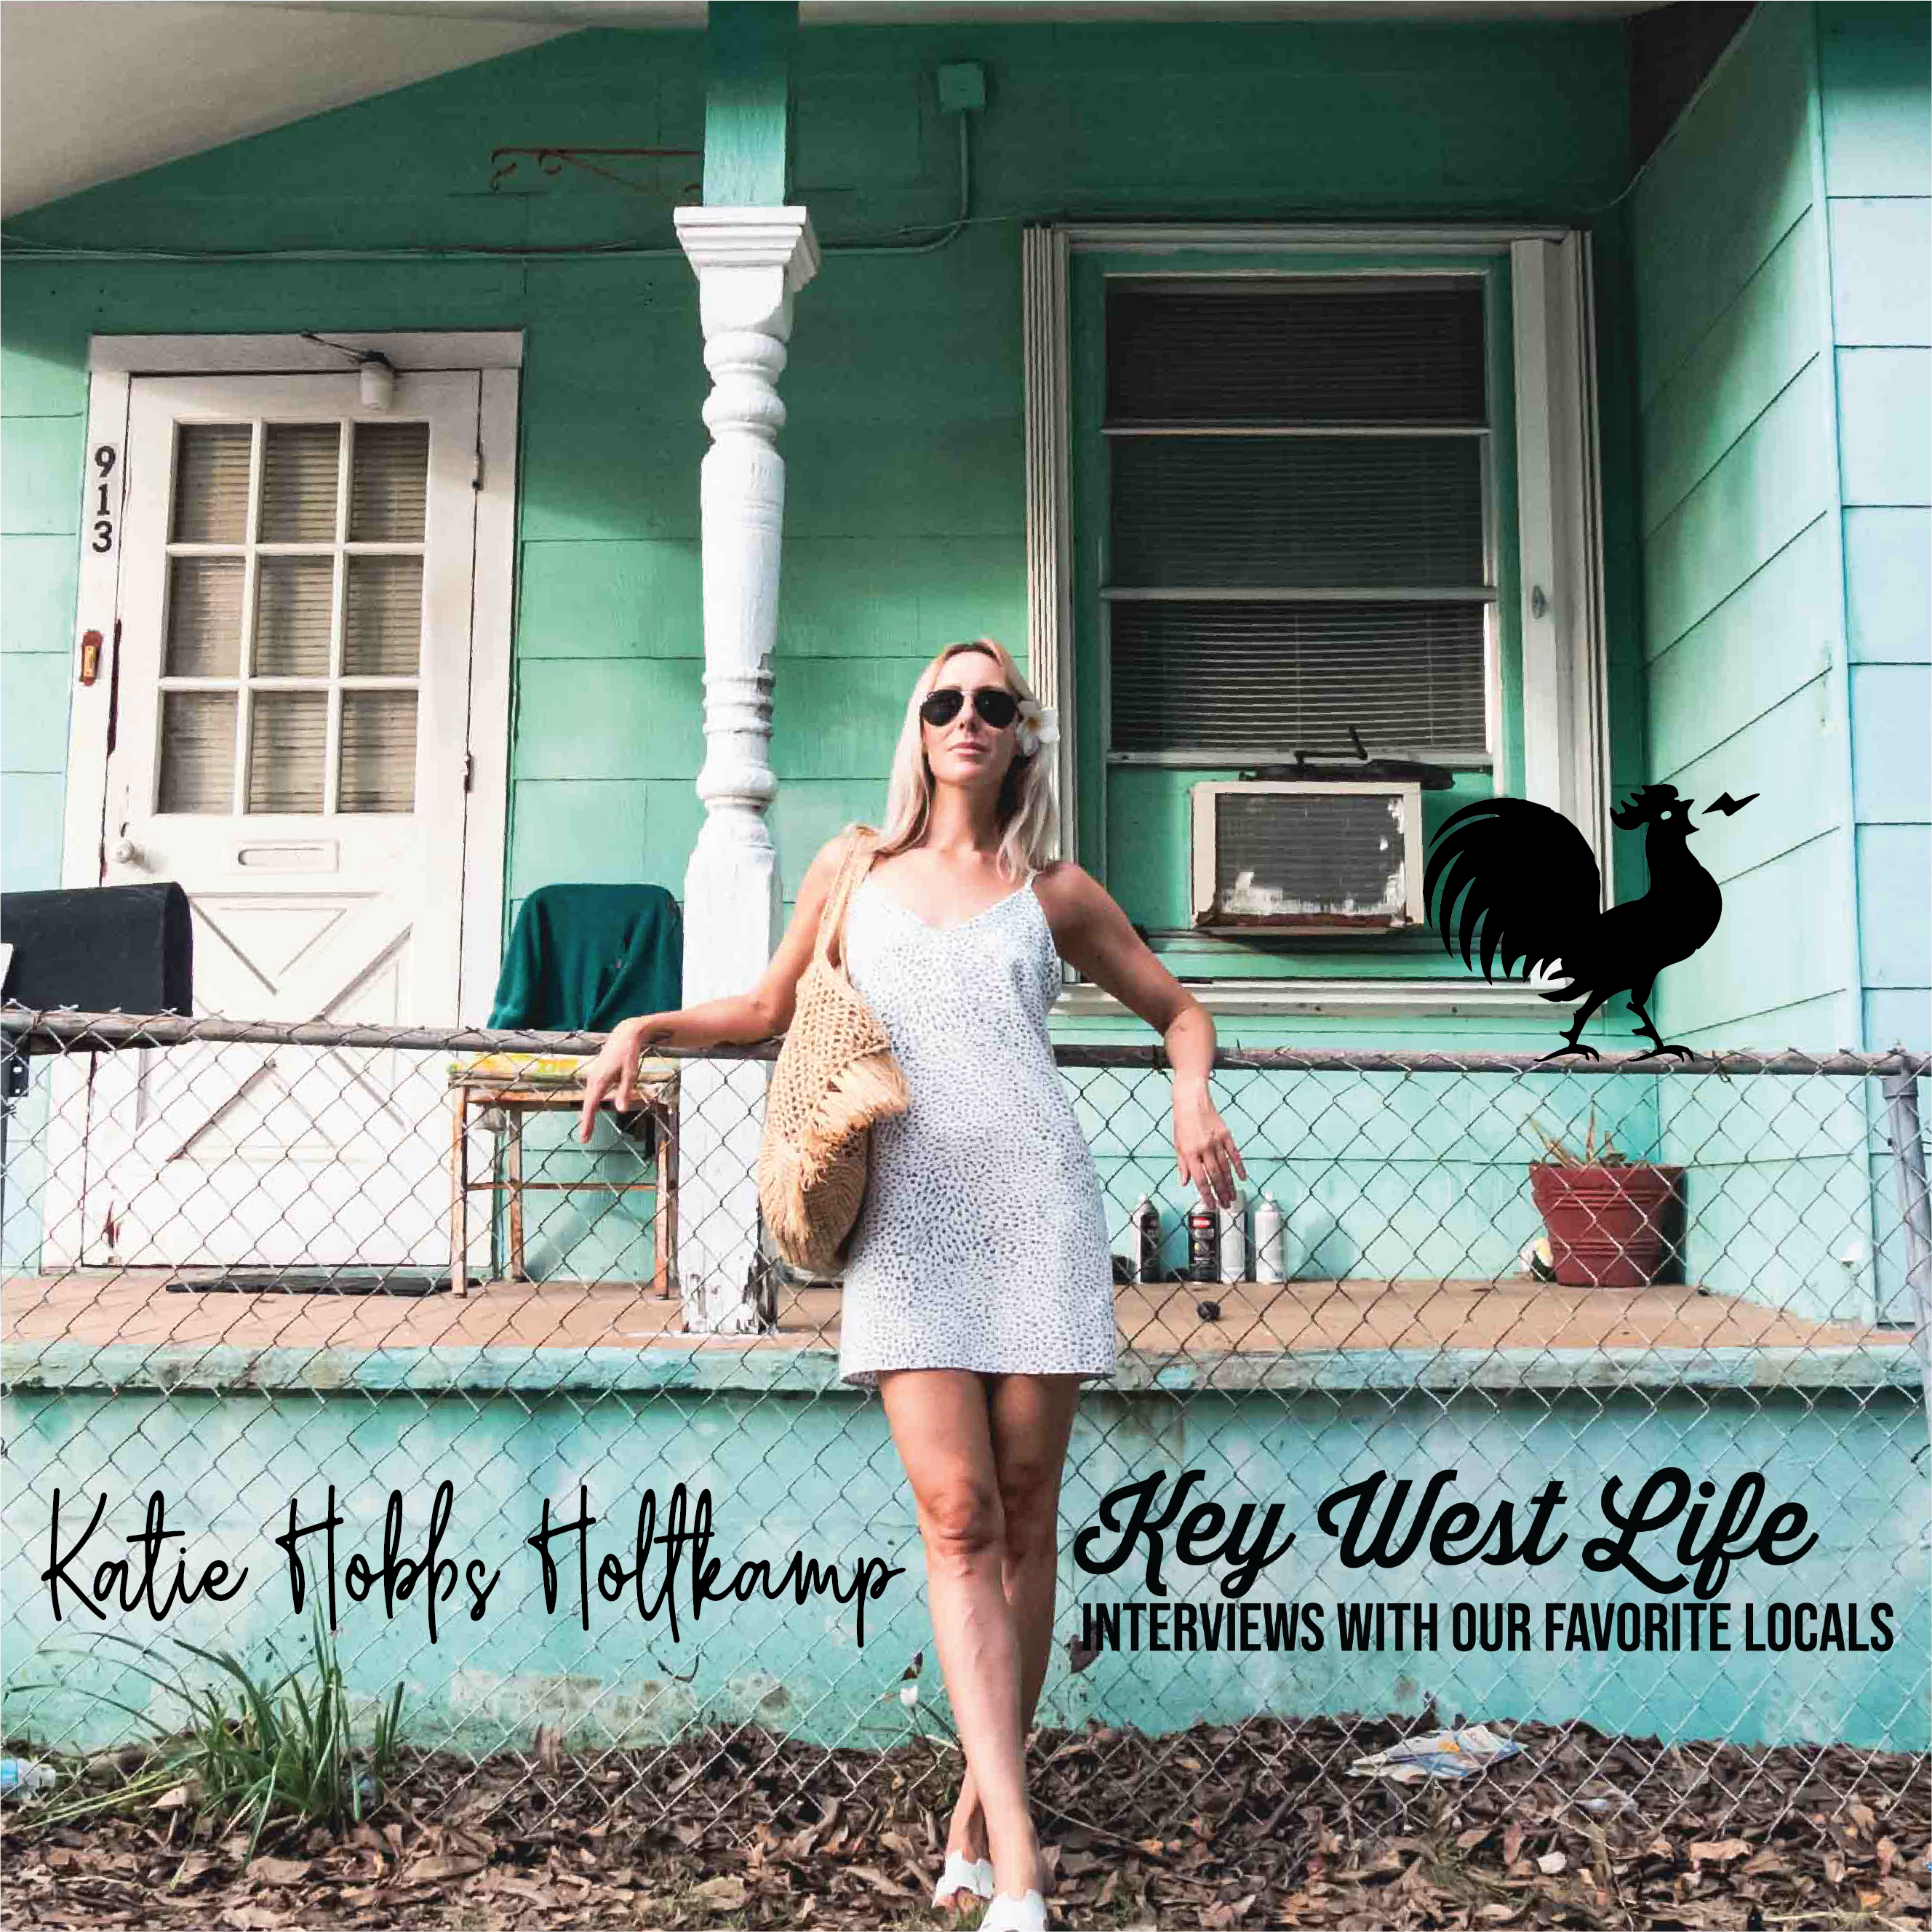 Key West Life: Katie Hobbs Holtkamp